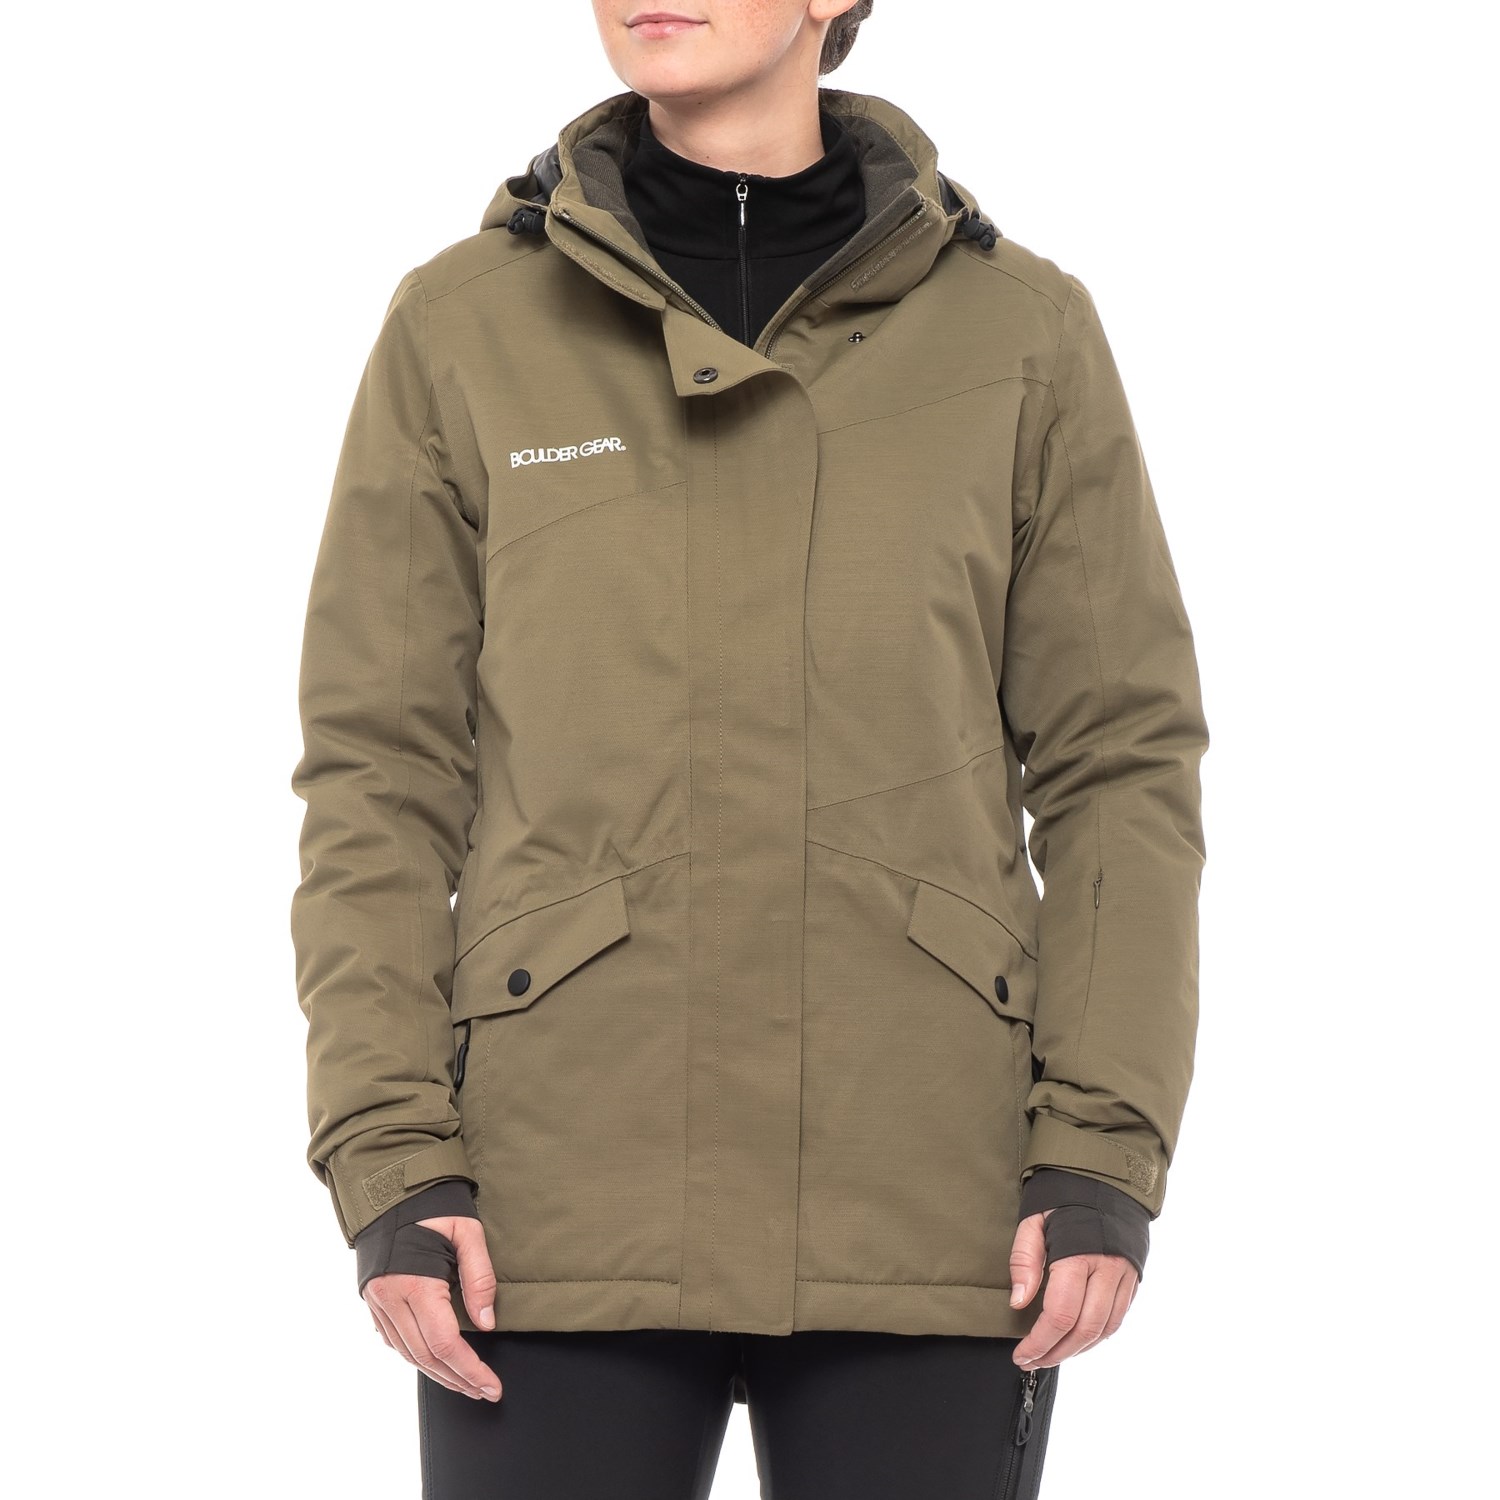 Boulder Gear Passage Ski Jacket – Waterproof, Insulated (For Women)